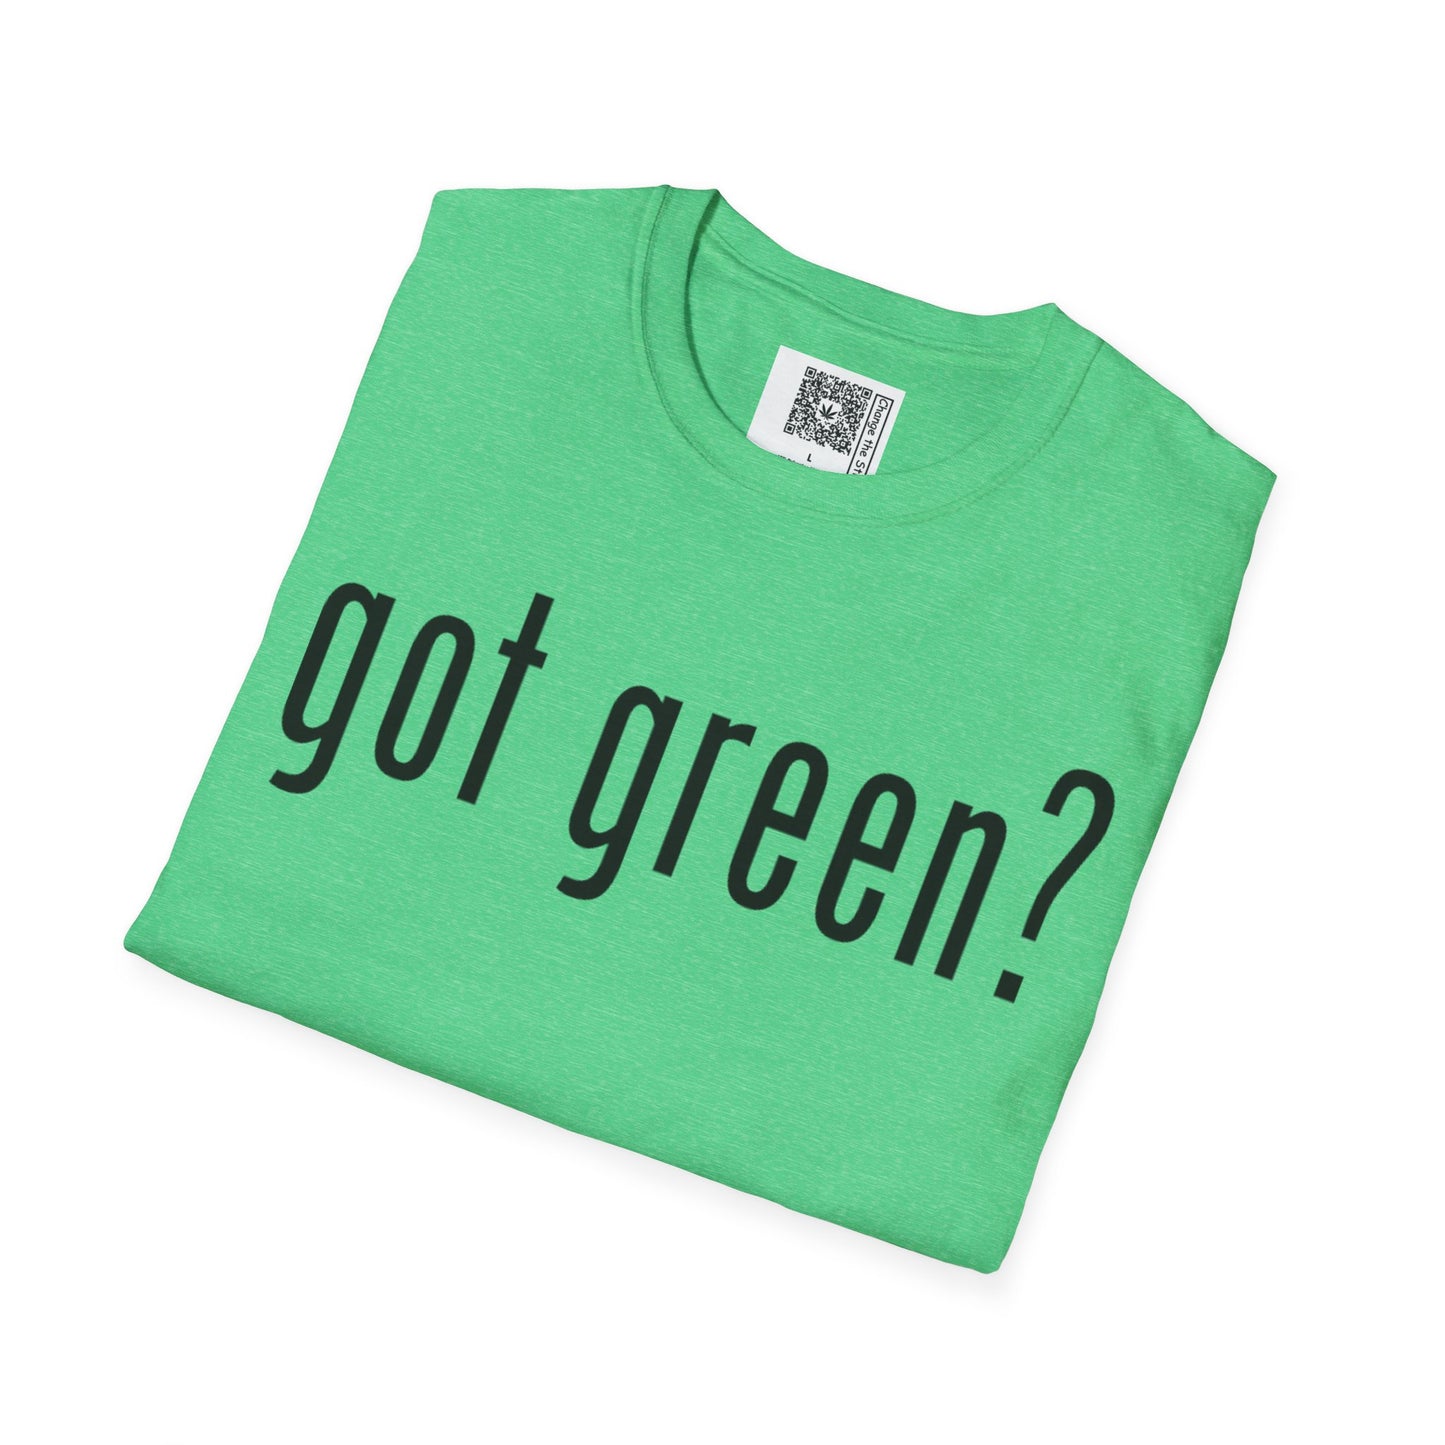 Change the Stigma GOT GREEN Weed Shirt